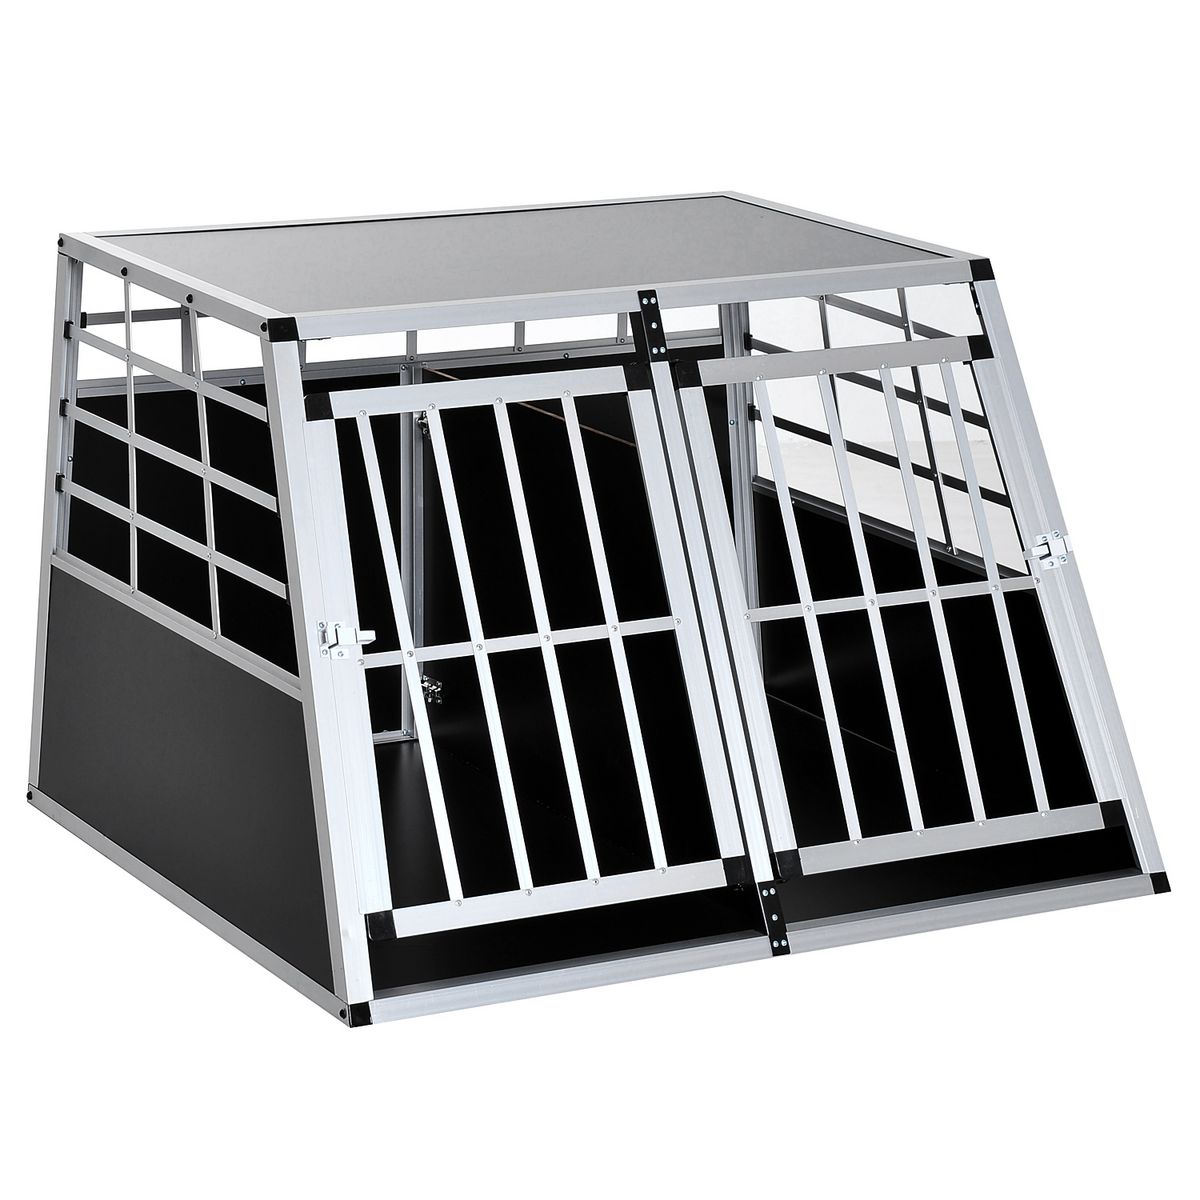  Cage chien, Cage chien xxl, Cage de transport chien